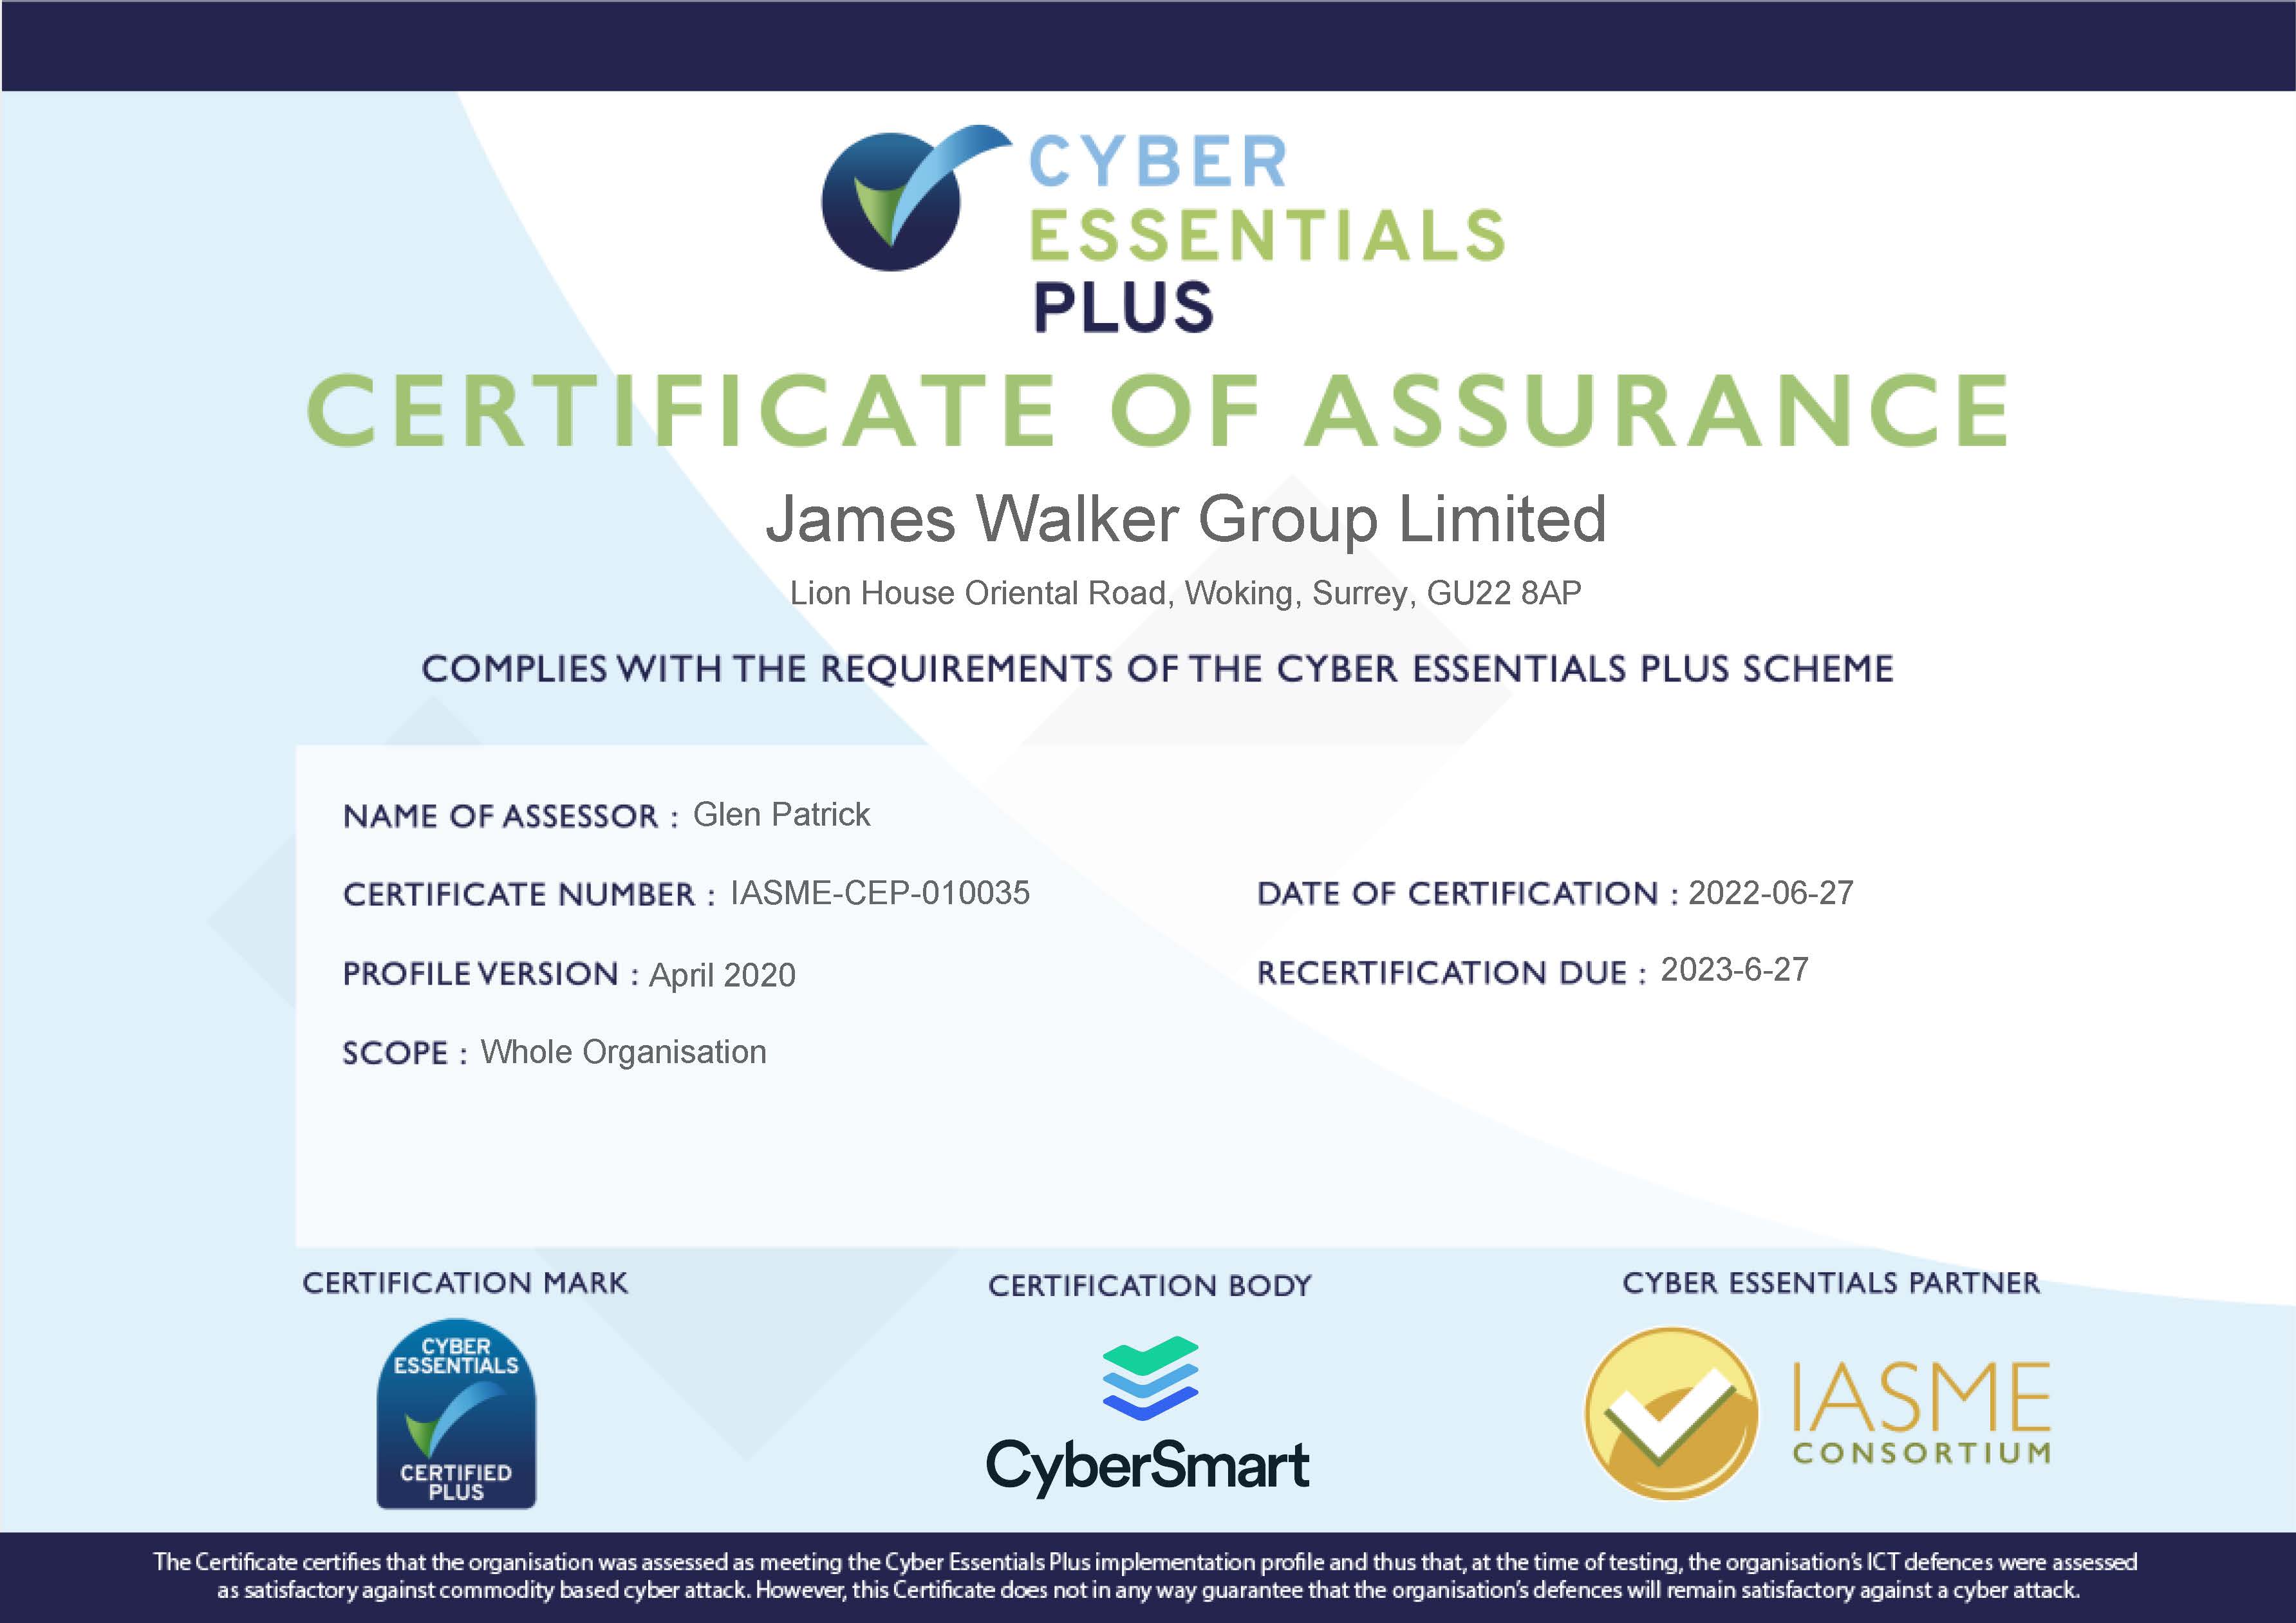 James_Walker_Cyber_Essentials_Plus_Certificate.jpg